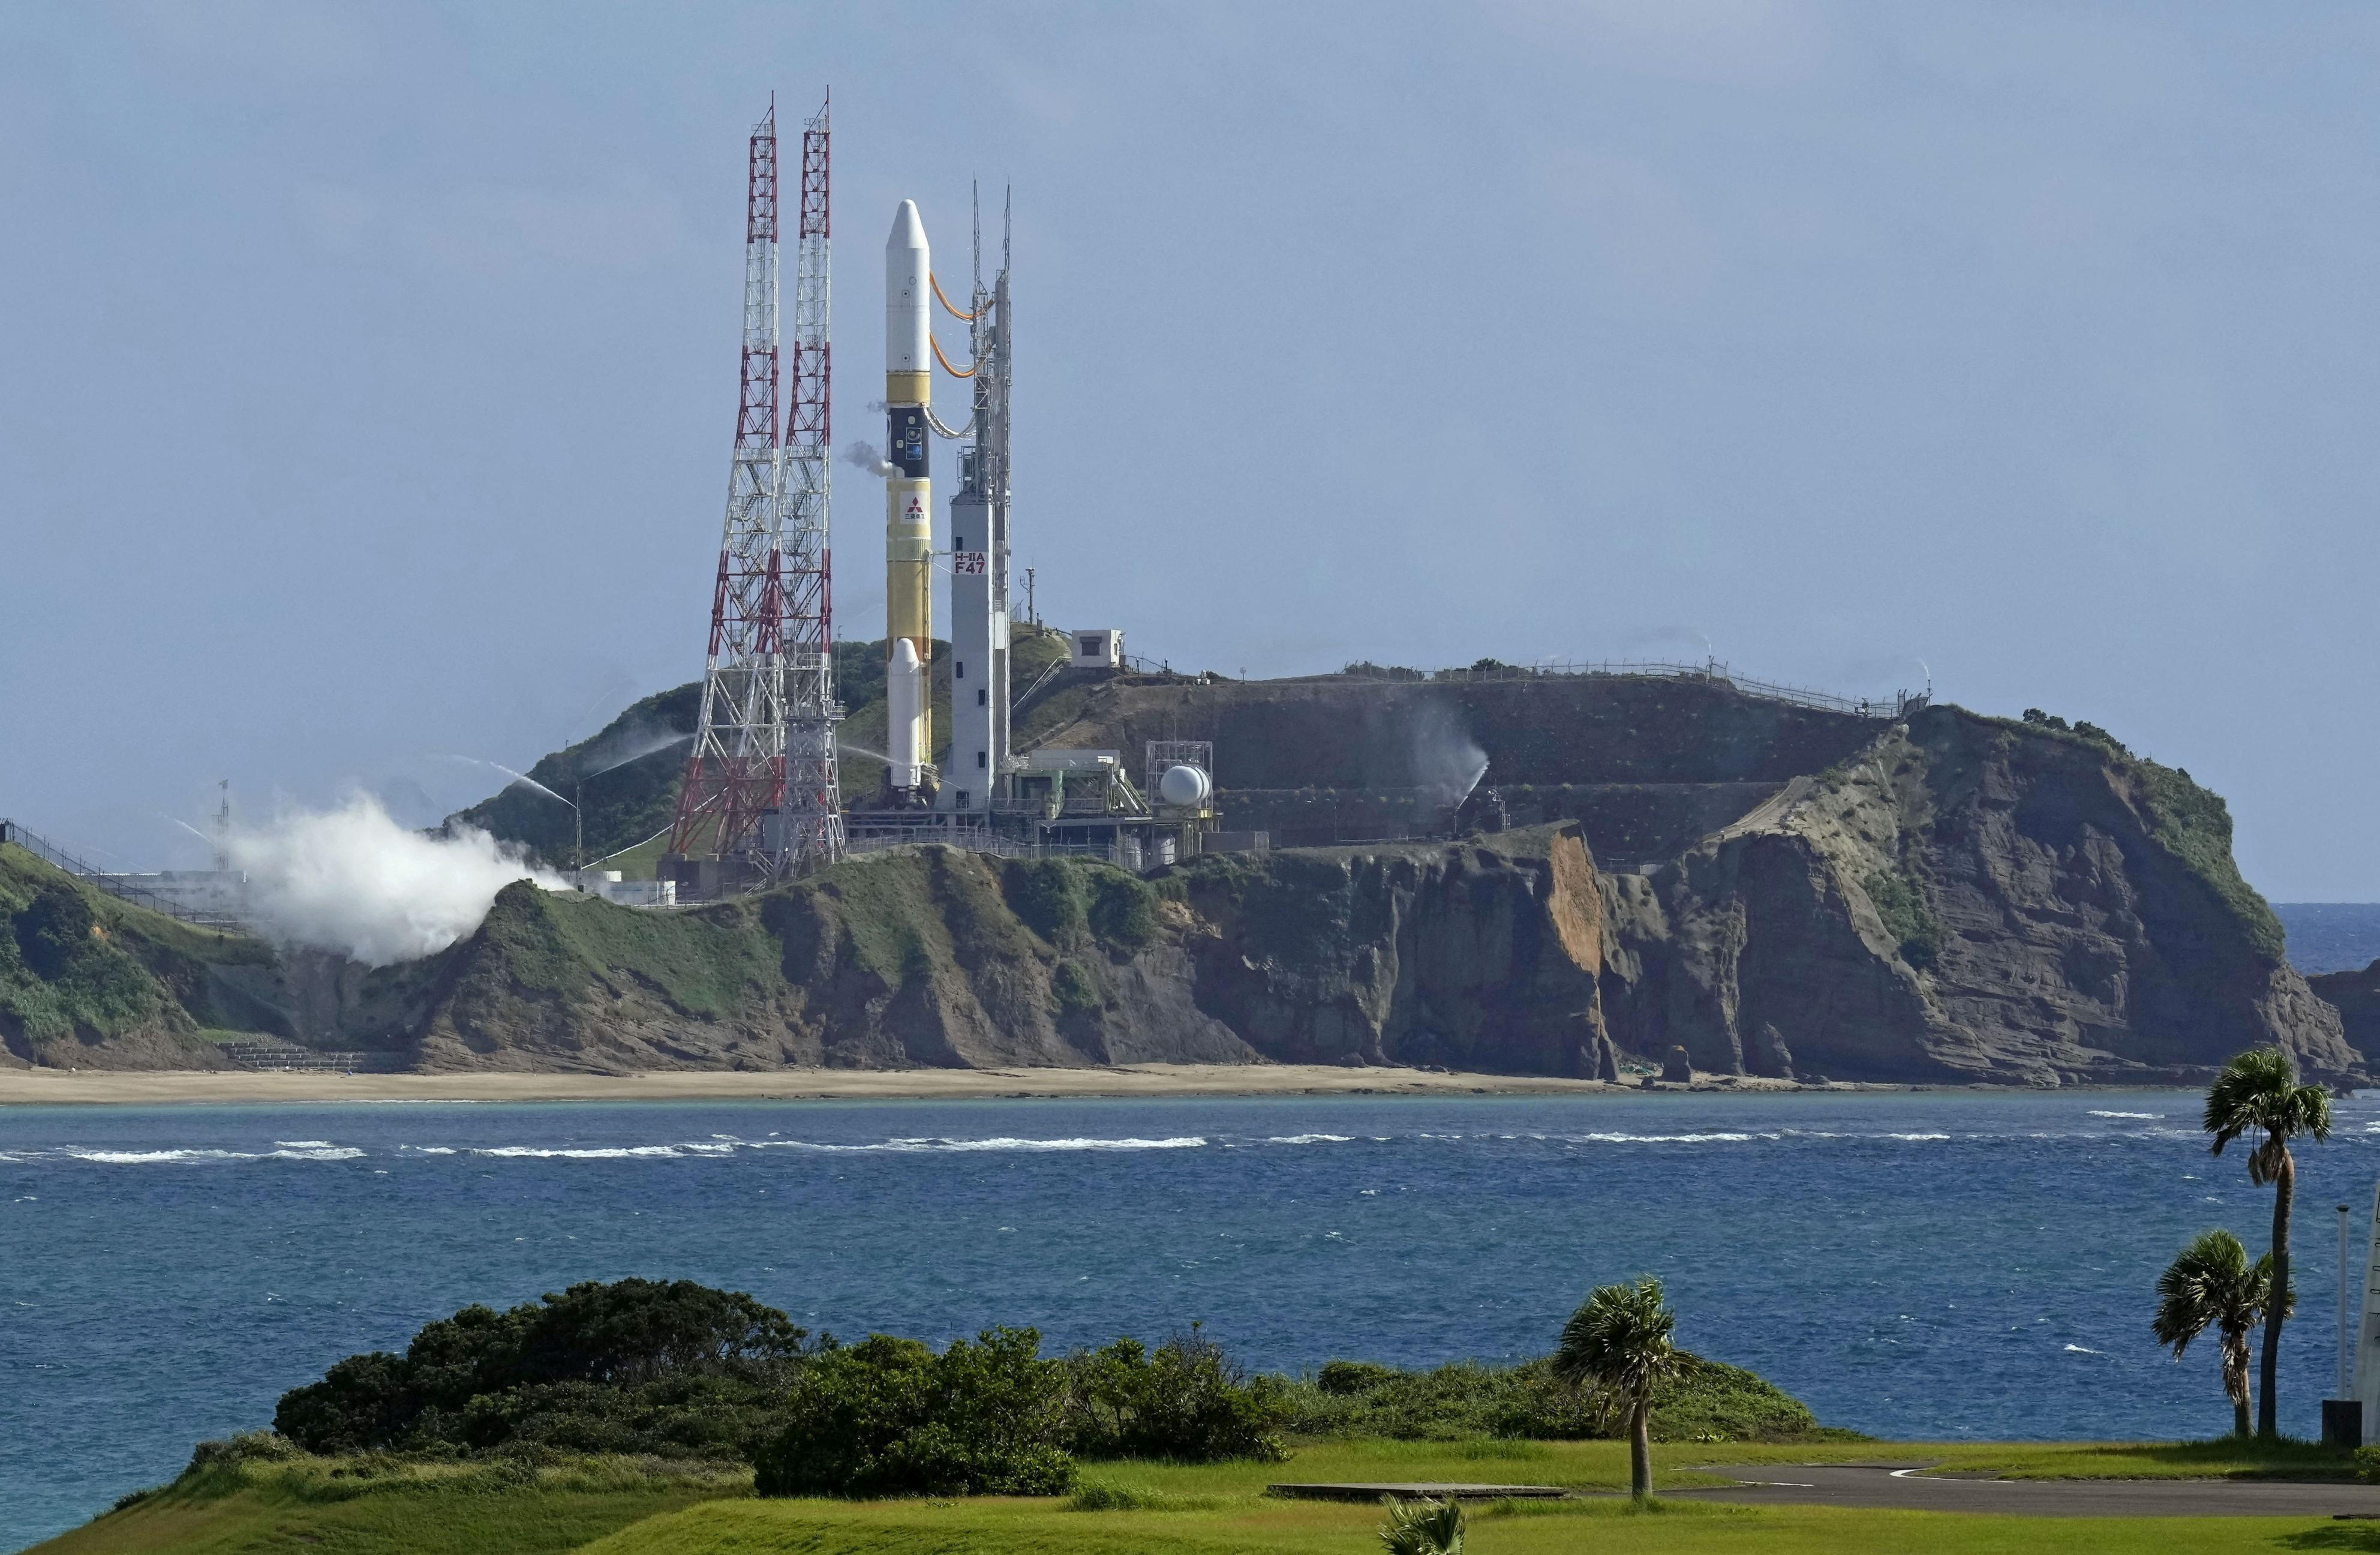 H-IIA No. 47 is on the launching pad at Tanegashima Space Center on the southwestern island of Tanegashima